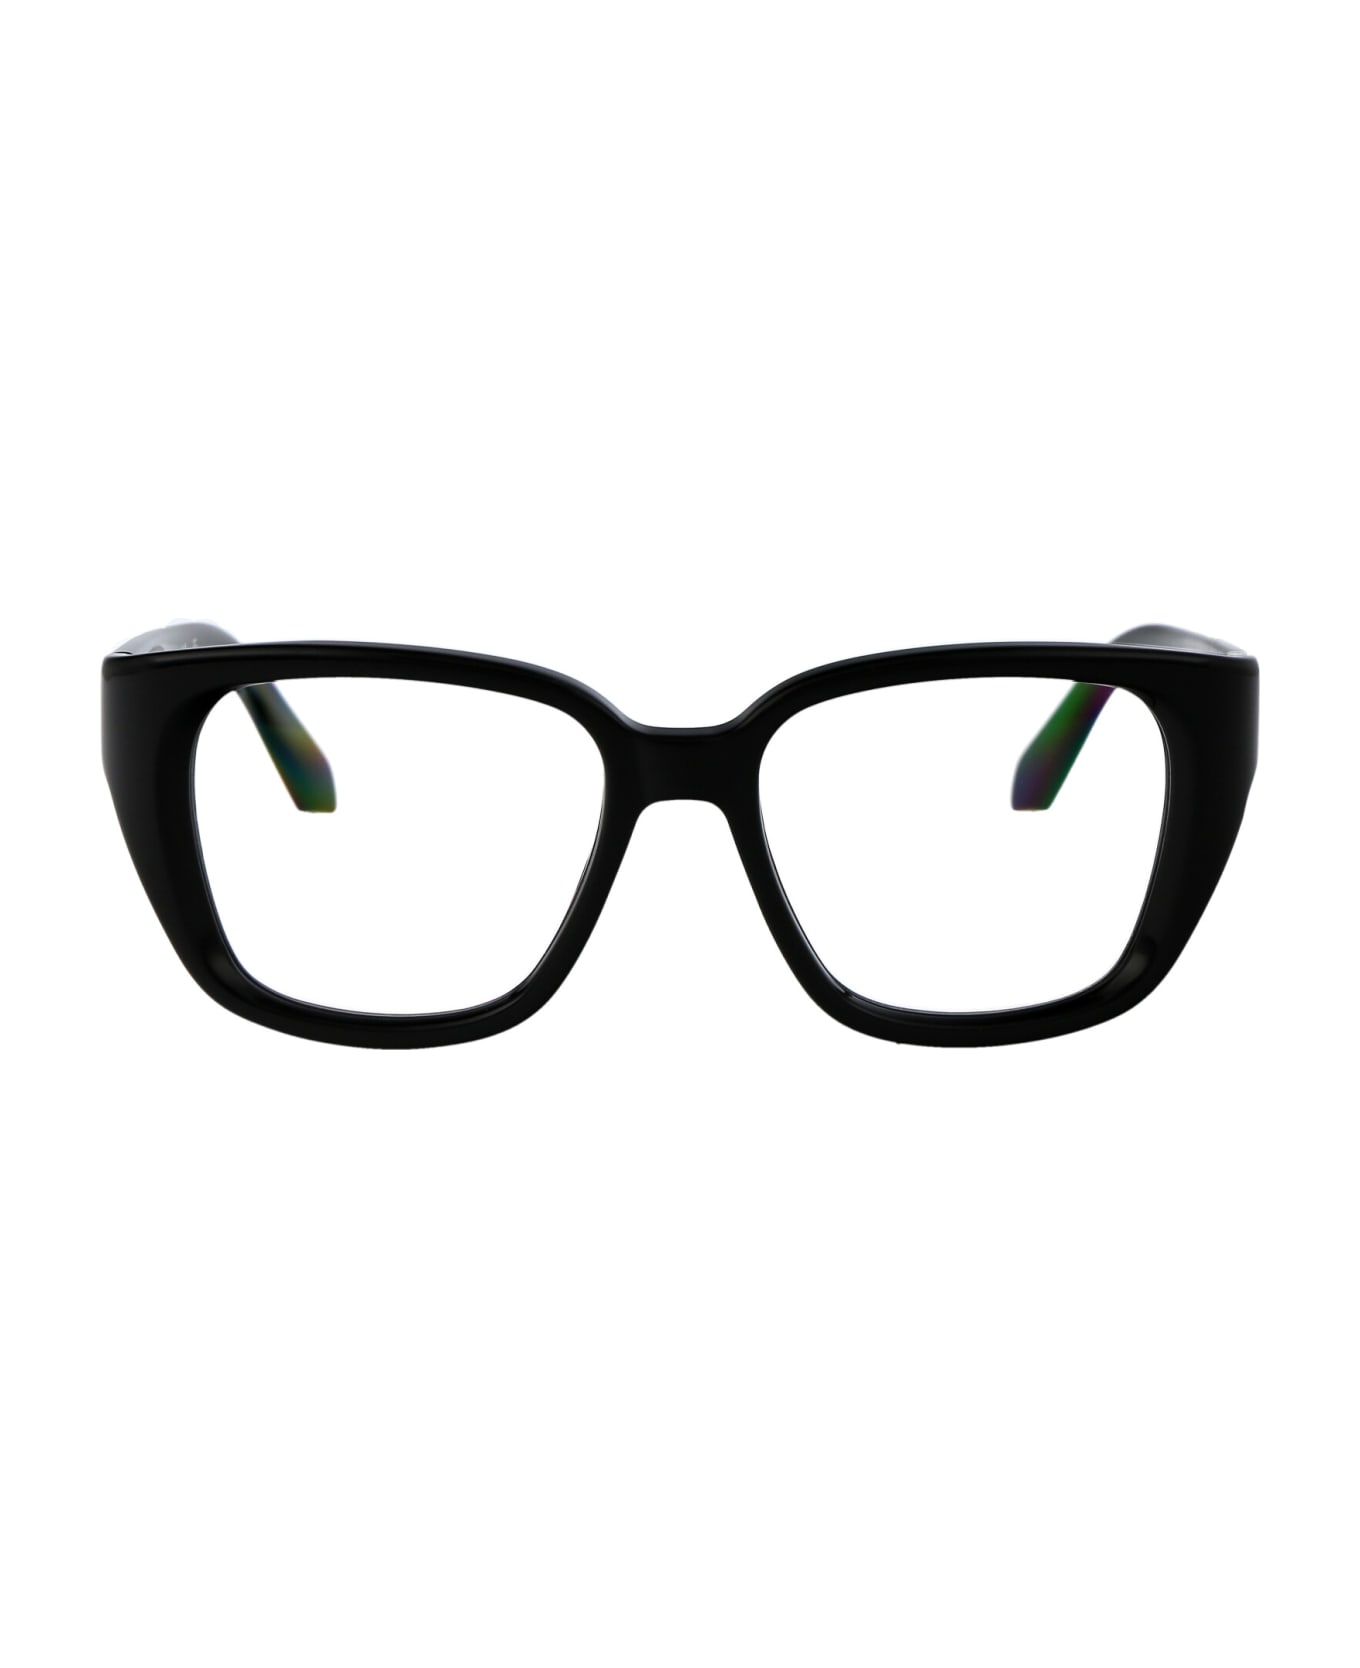 Off-White Optical Style 63 Glasses - 1000 BLACK